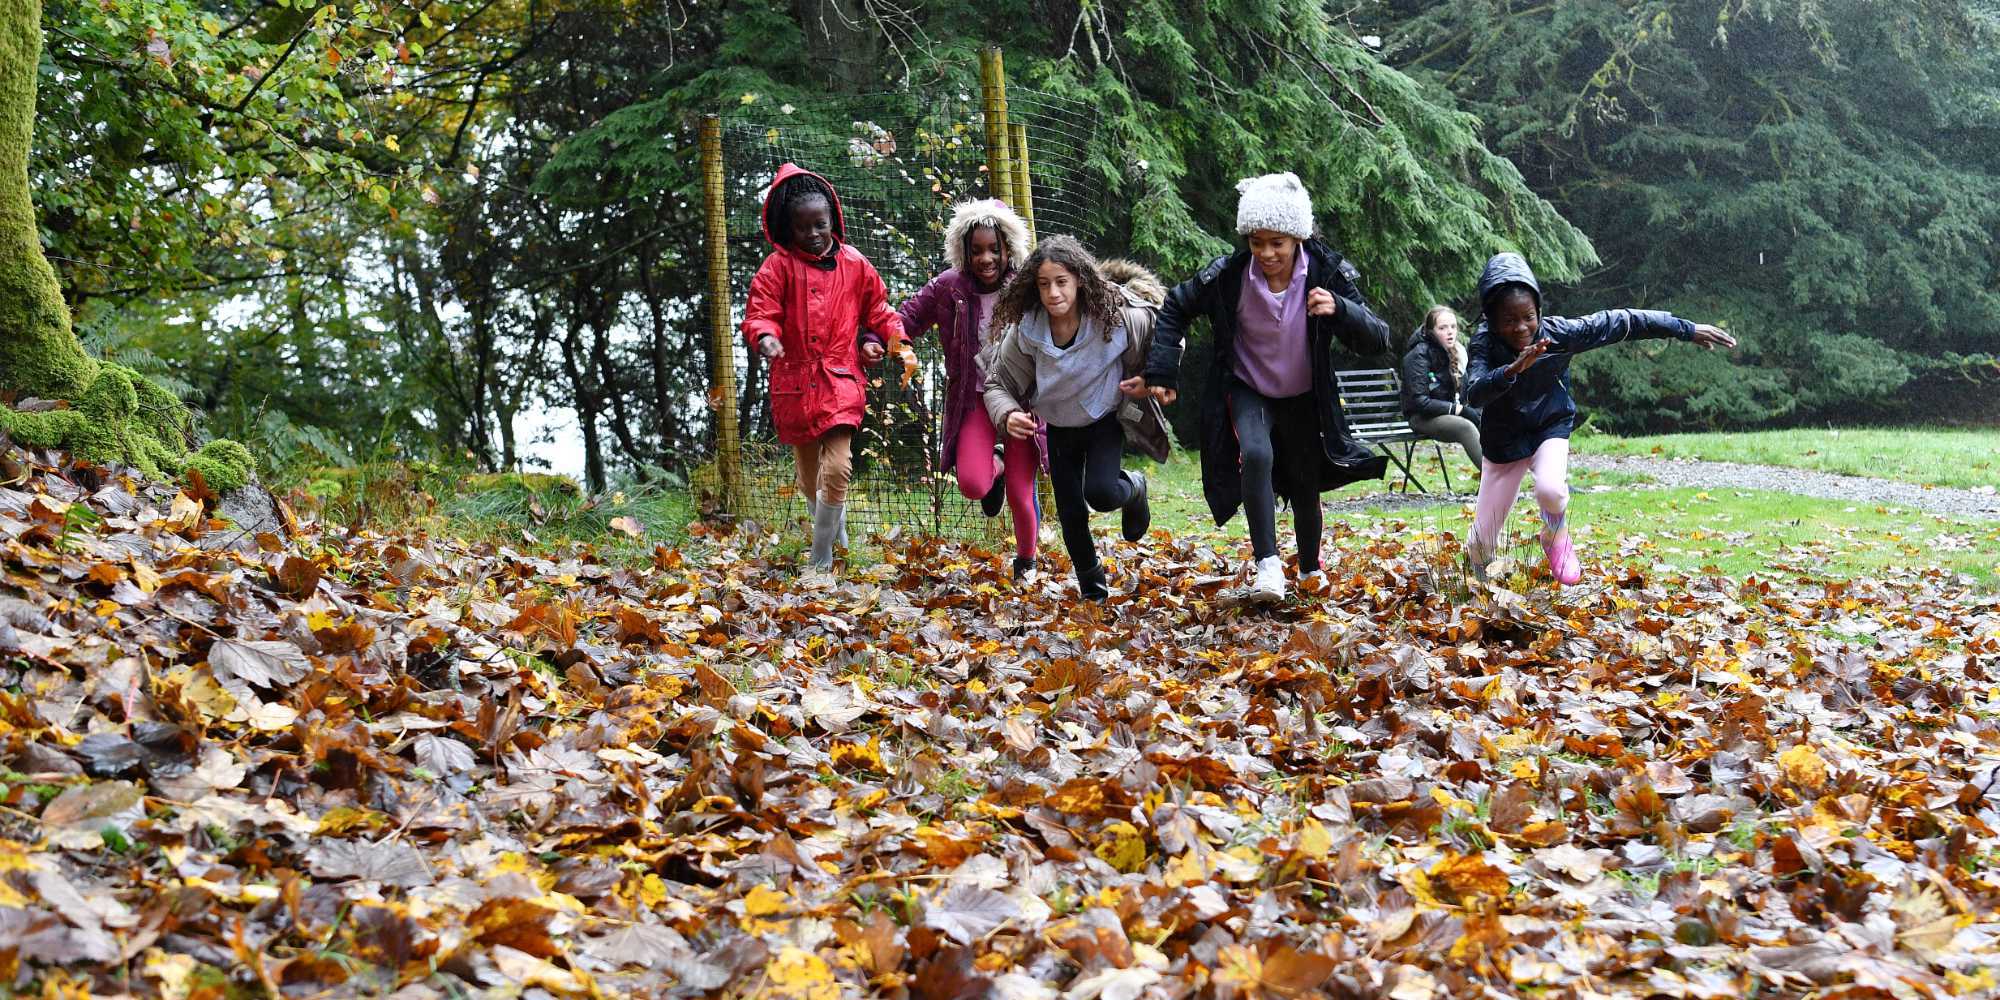 Group of schoolchildren running through autumn leaves